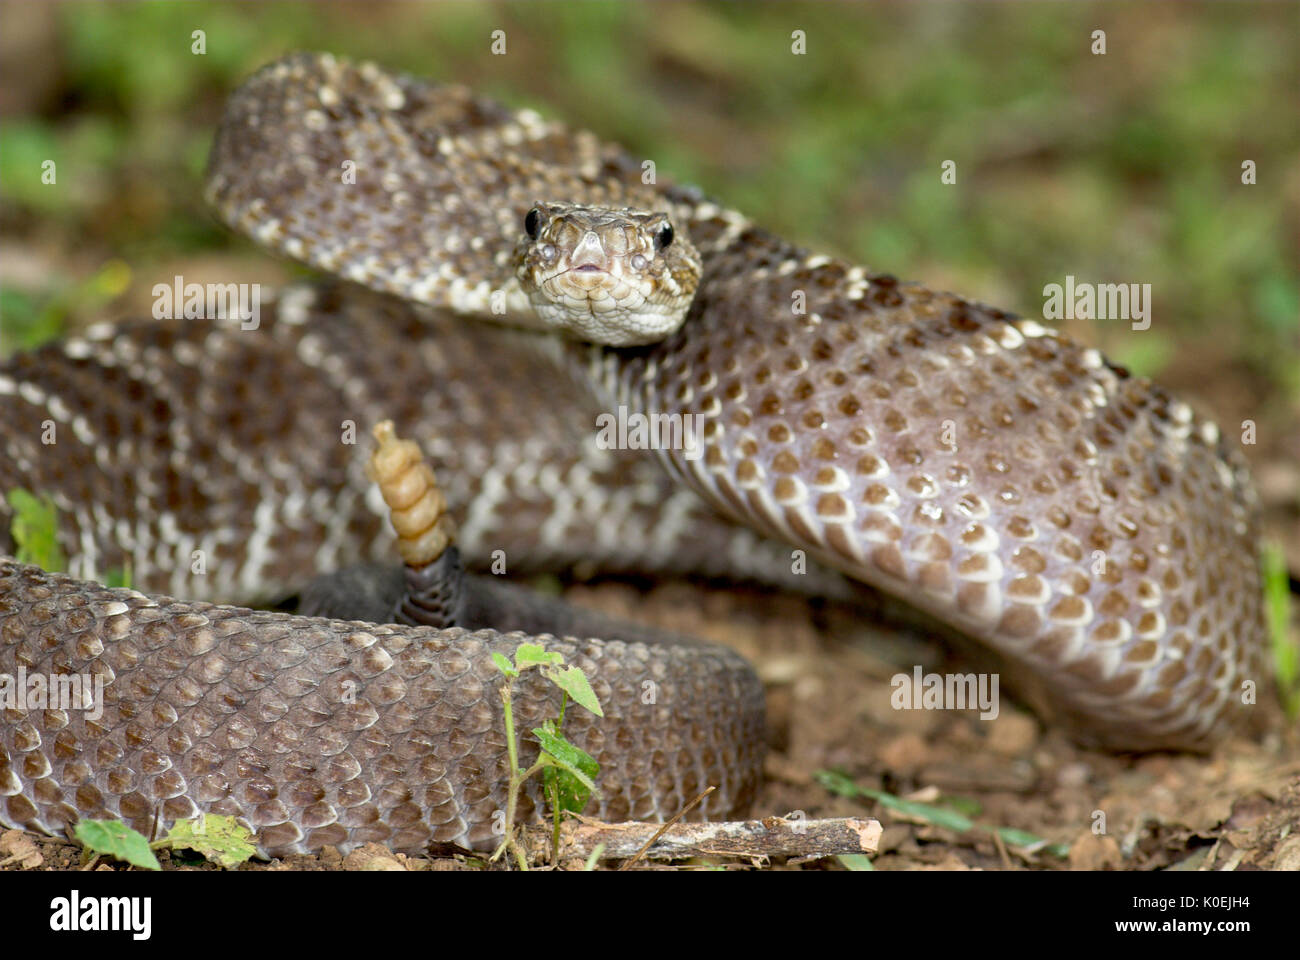 Uracoan Rattle Snake, Crotalus durissus vegrandis, found only in Venezuela in South America, defensive, aggressive pose, striking, noise, noisy, venem Stock Photo